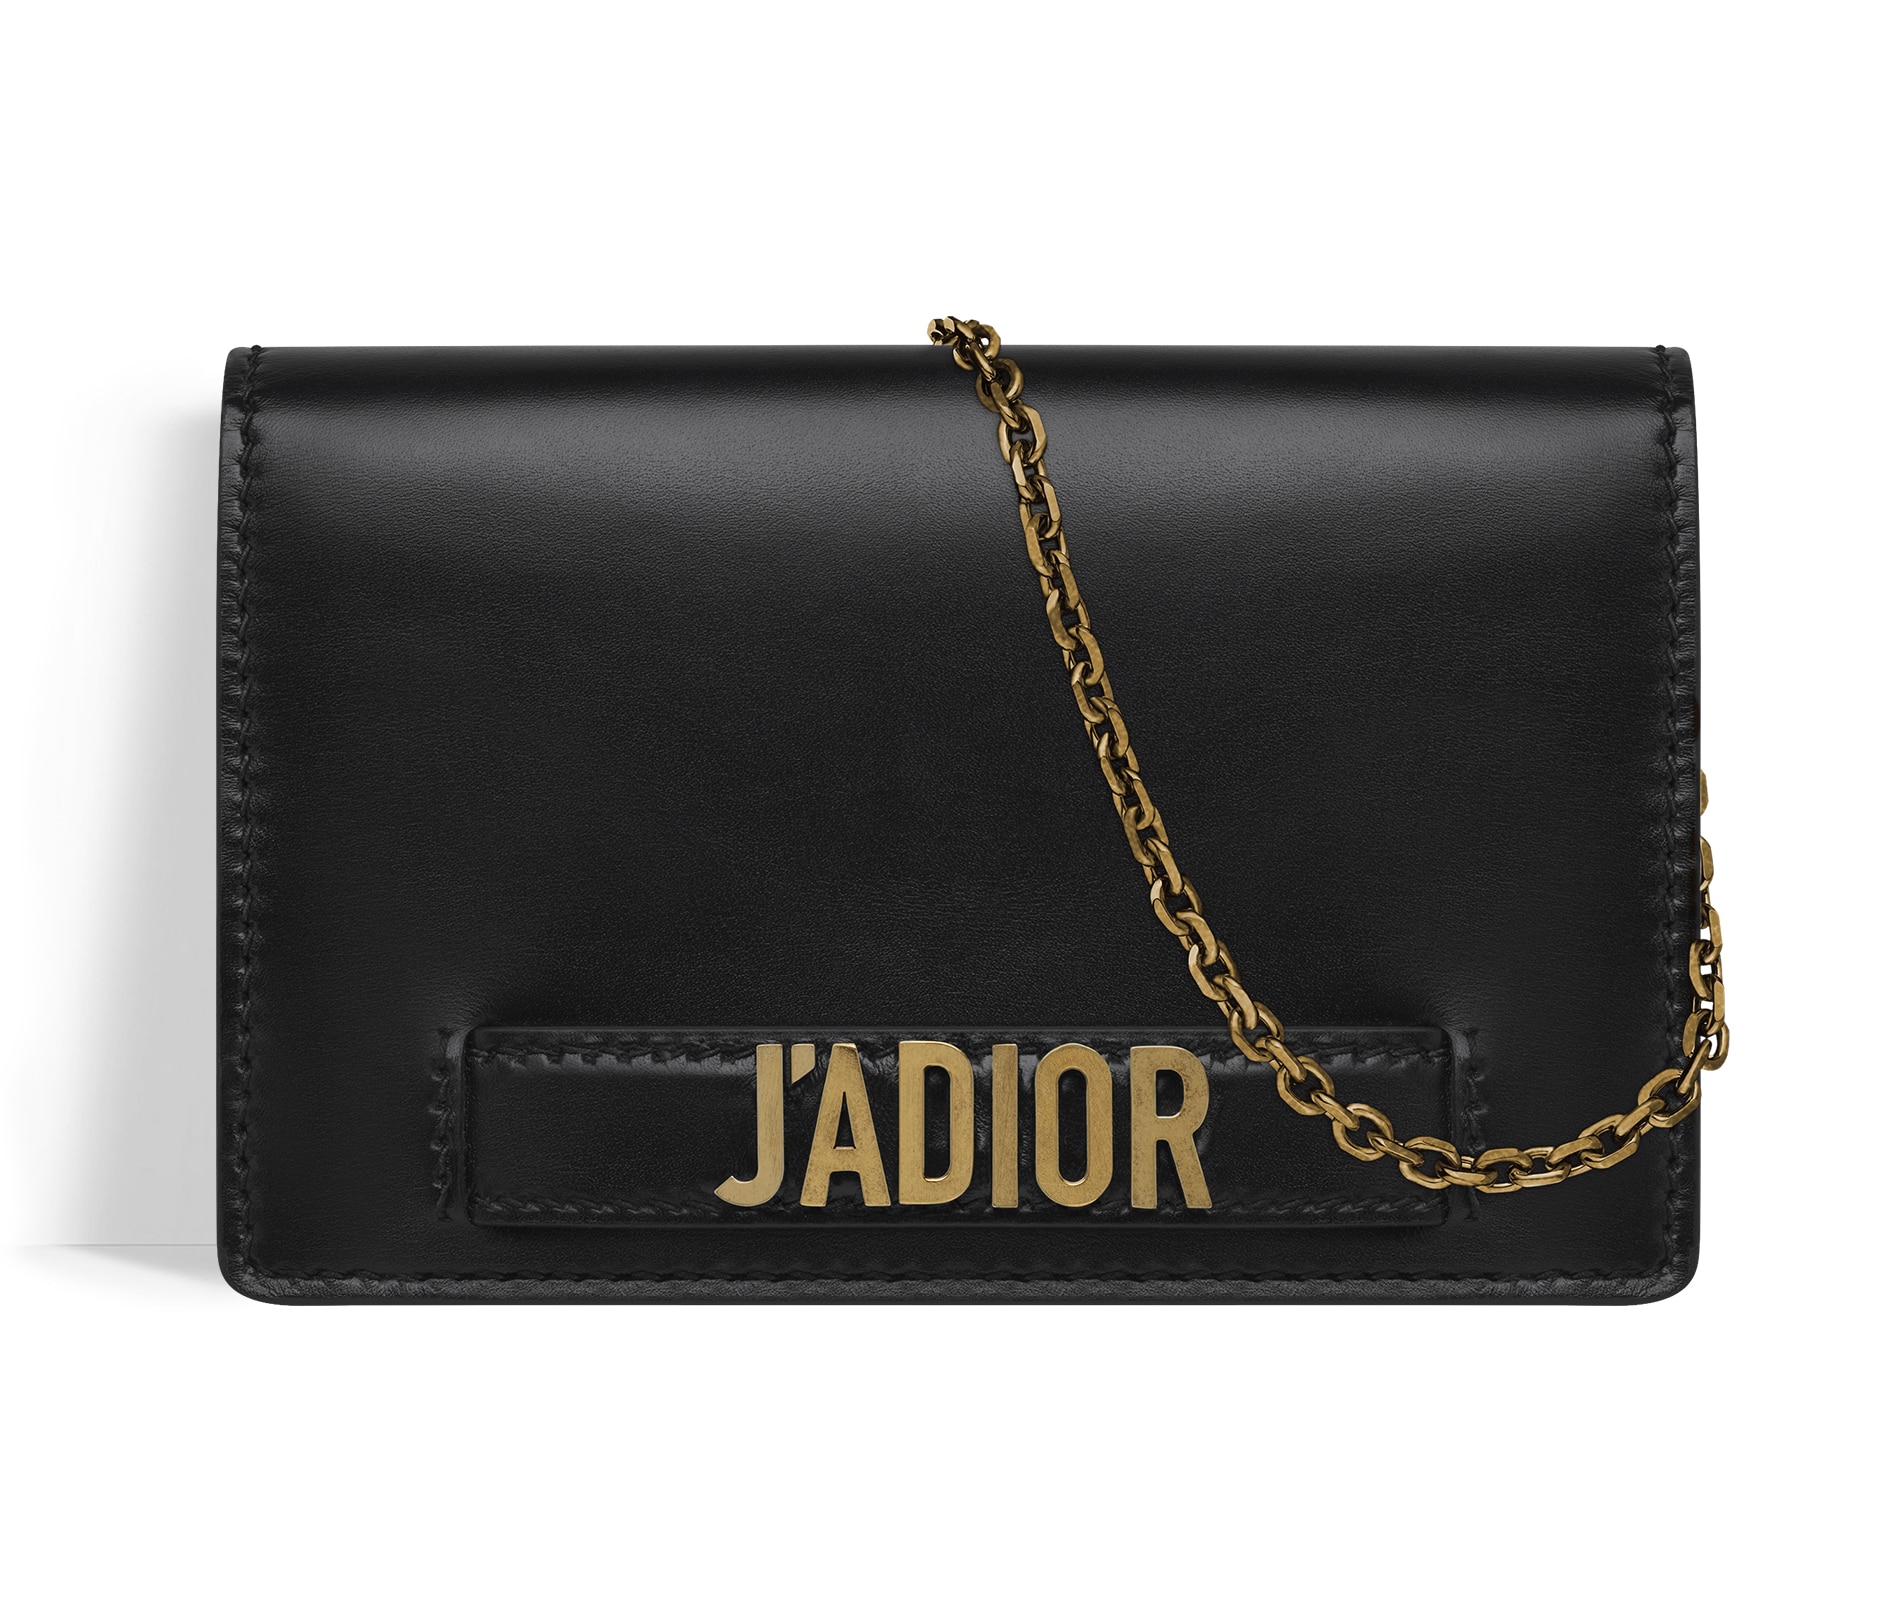 J'adior leather handbag Dior Camel in Leather - 40535348